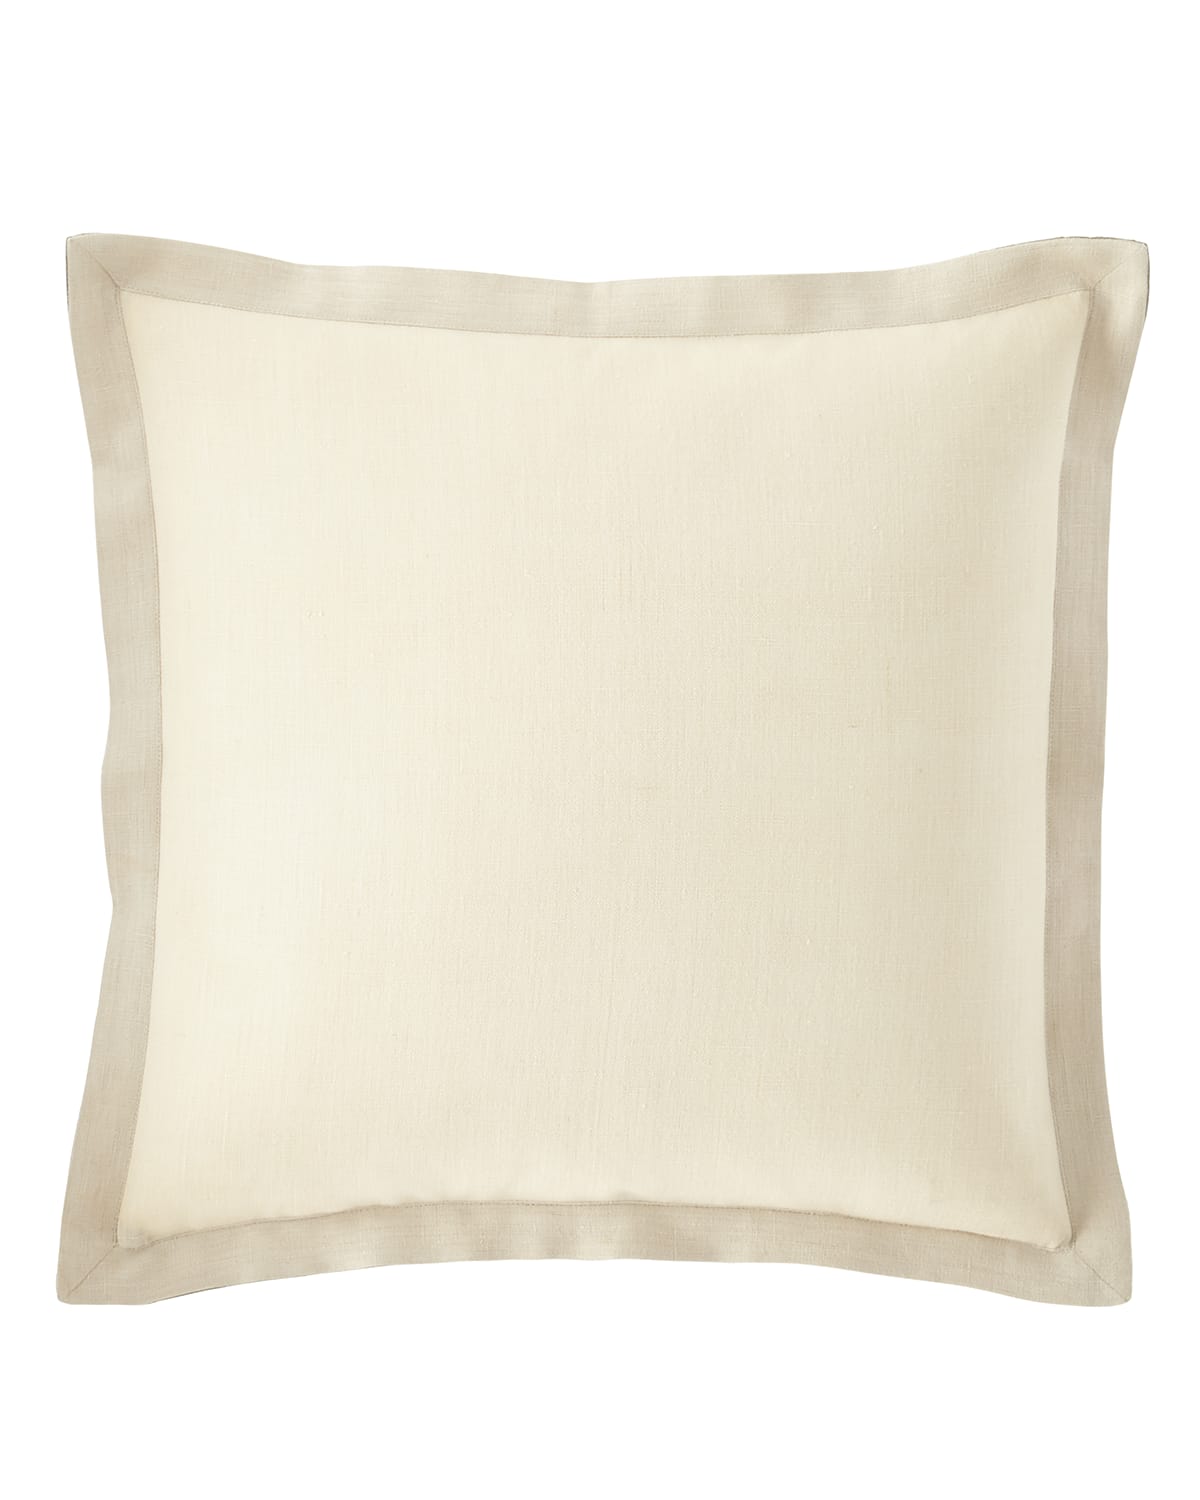 Image Lauren Ralph Lauren Allaire Decorative Pillow, 18"Sq.